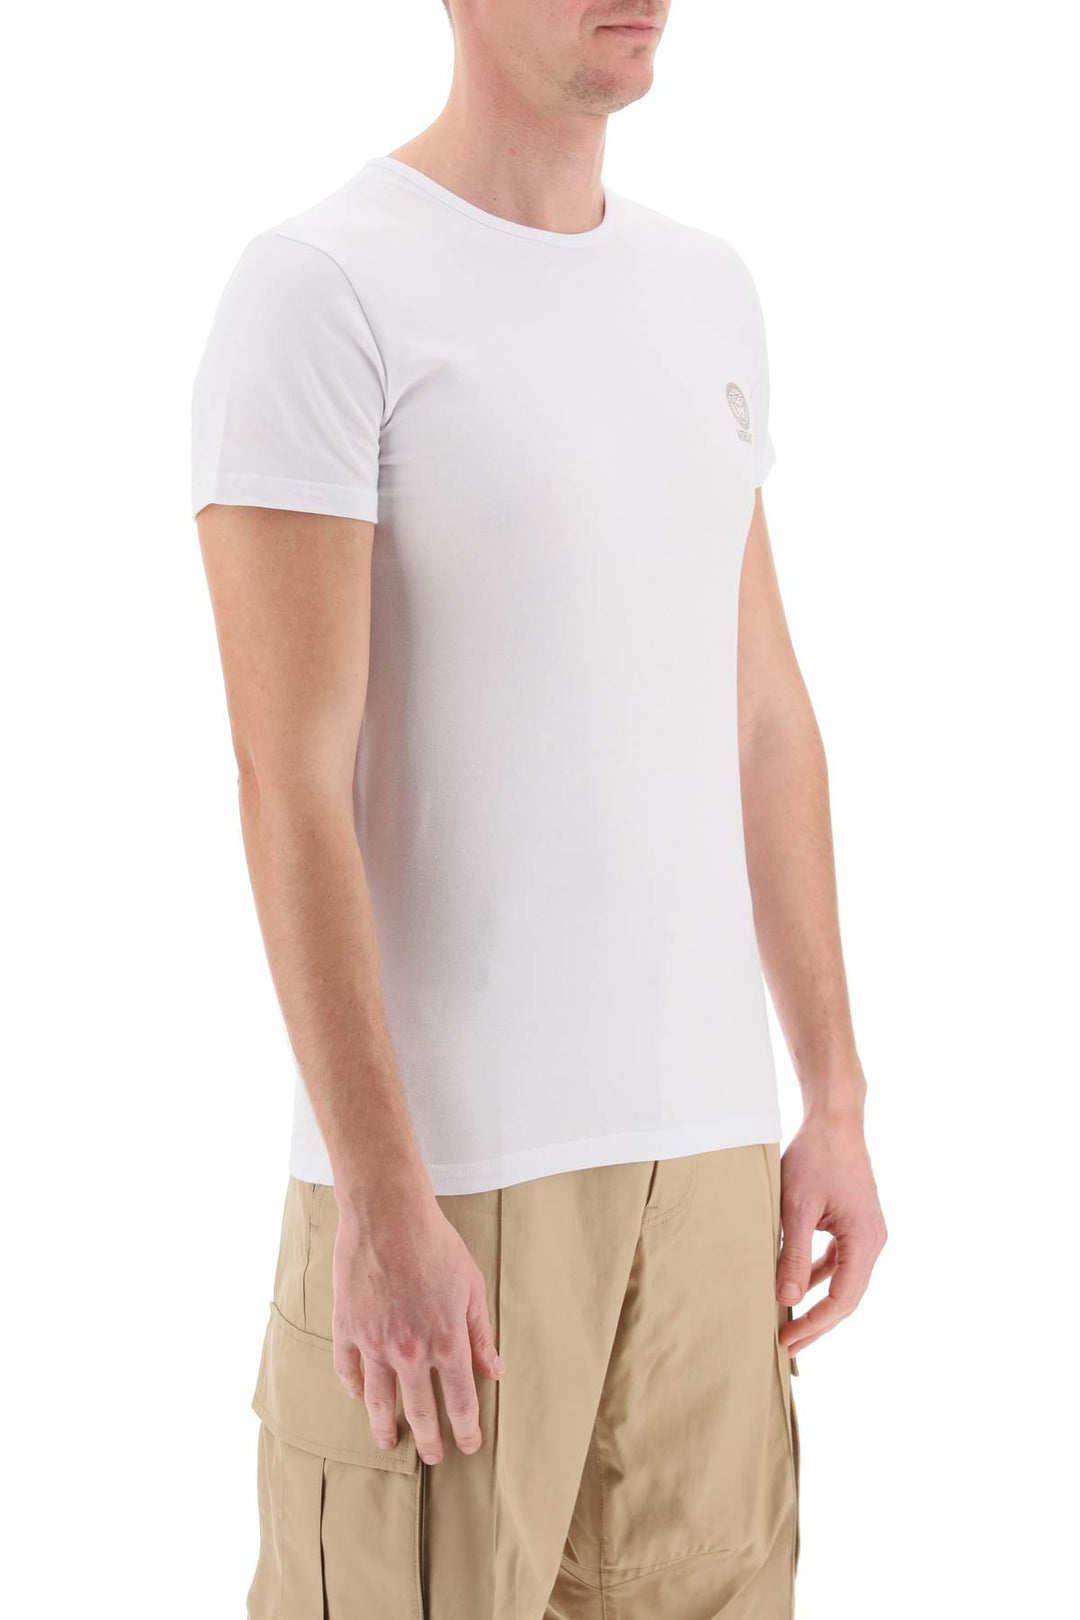 Versace Medusa Underwear T Shirt Bi Pack   Bianco